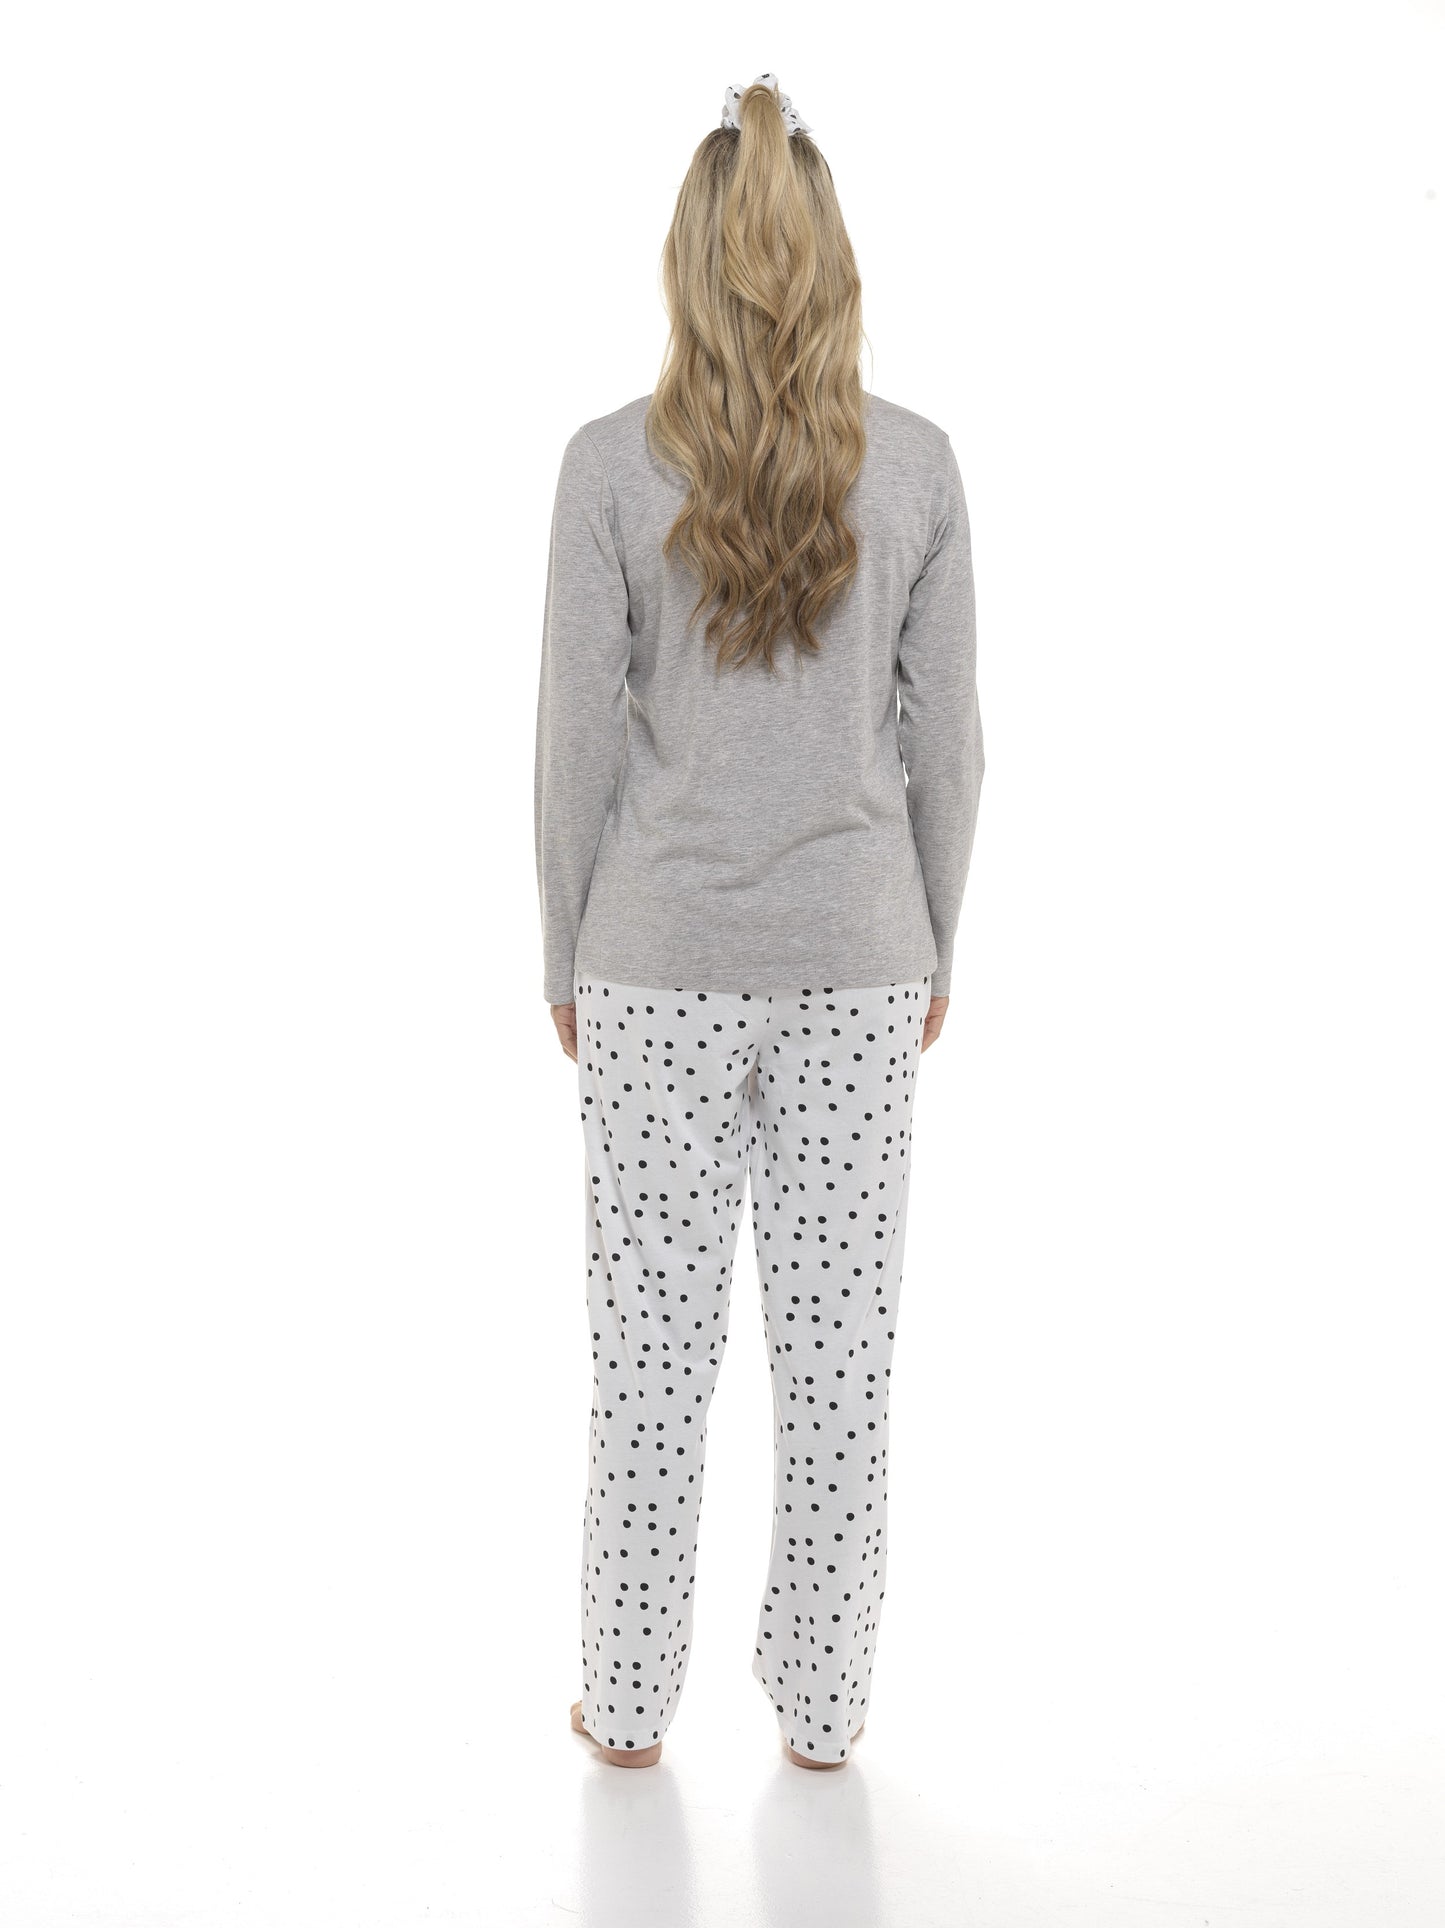 Ladies Dalmatian Dog Print Cotton Pyjamas with Matching Scrunchie Set